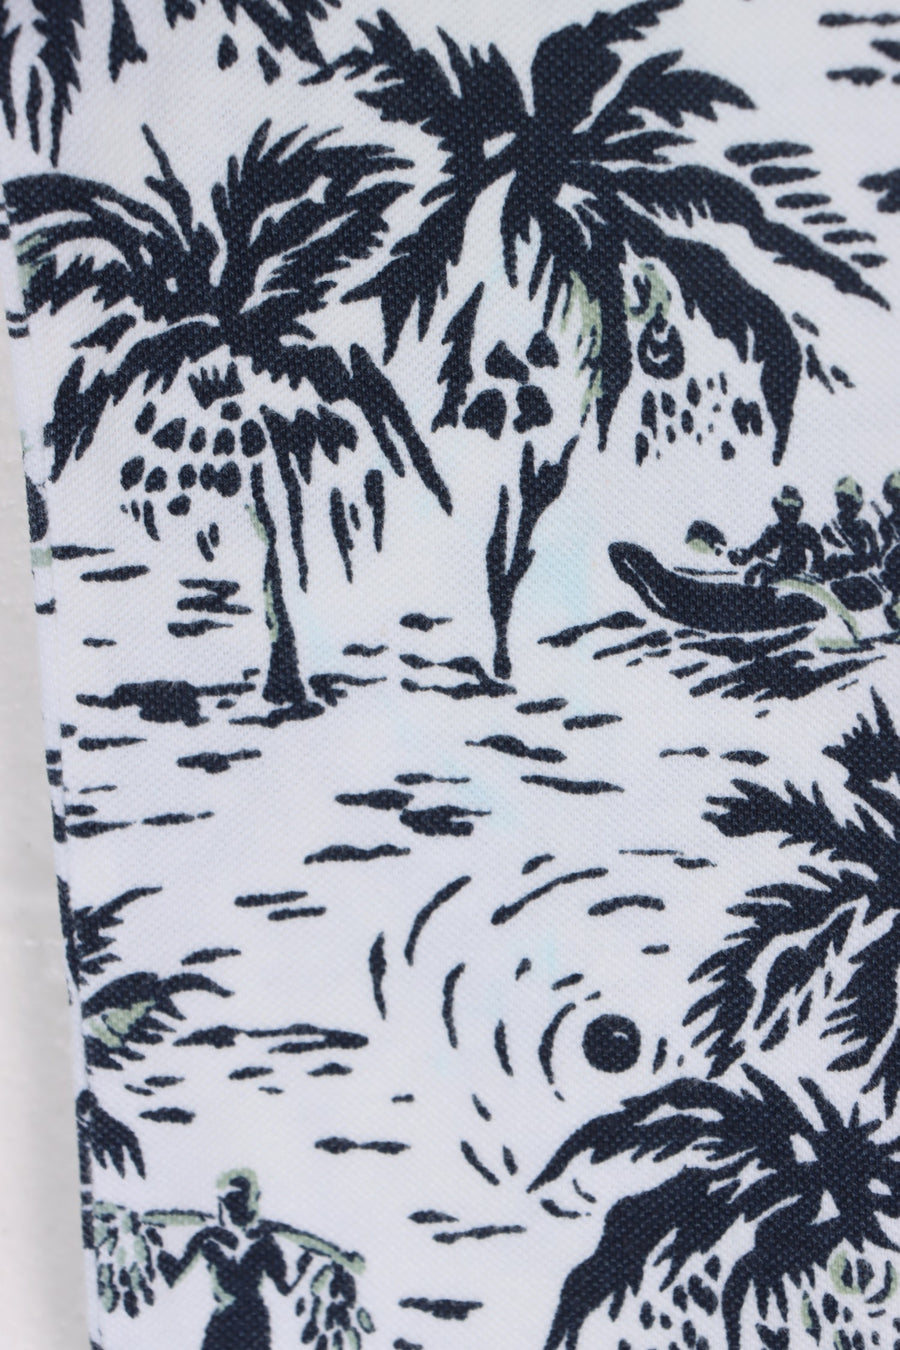 RALPH LAUREN POLO Tropical Hawaiian Print Polo Shirt USA Made (L)